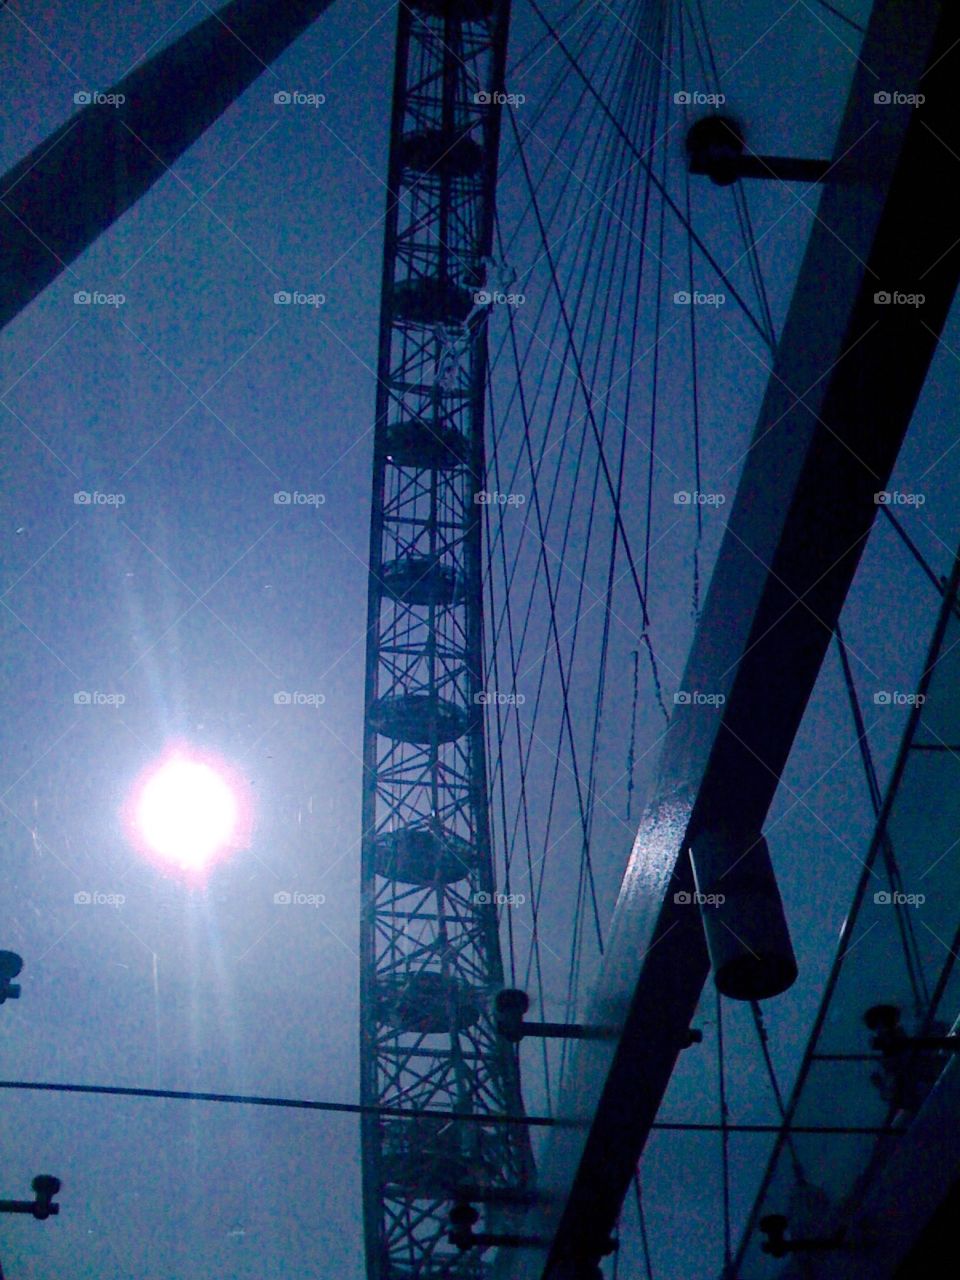 Sun in the Eye. The sun silhouettes the London eye.